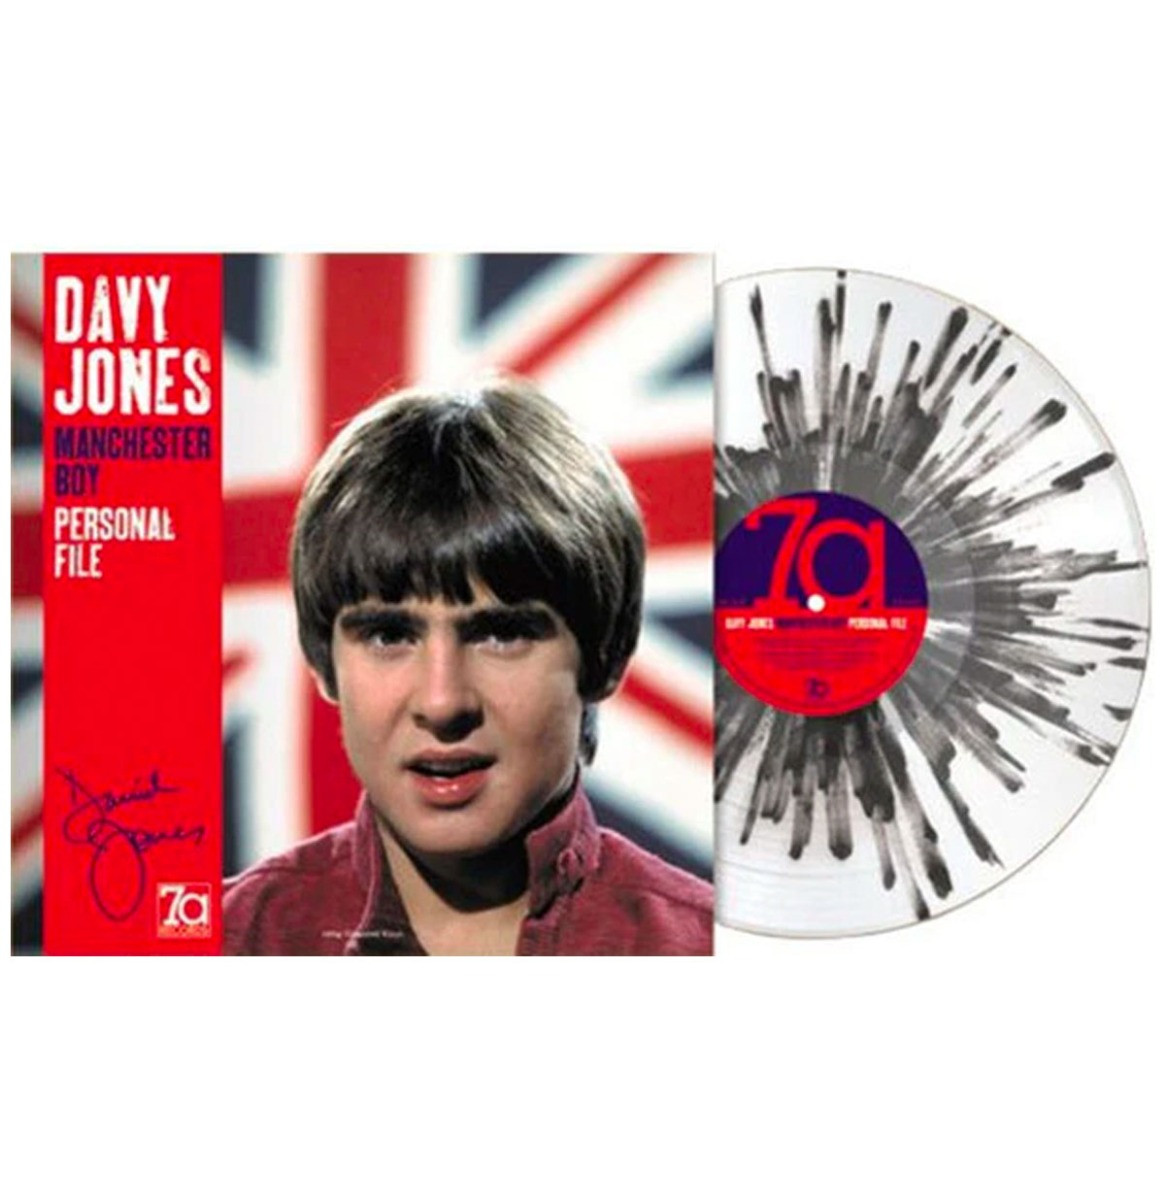 Davy Jones - Manchester Boy - Personal File (Gekleurd Vinyl) LP